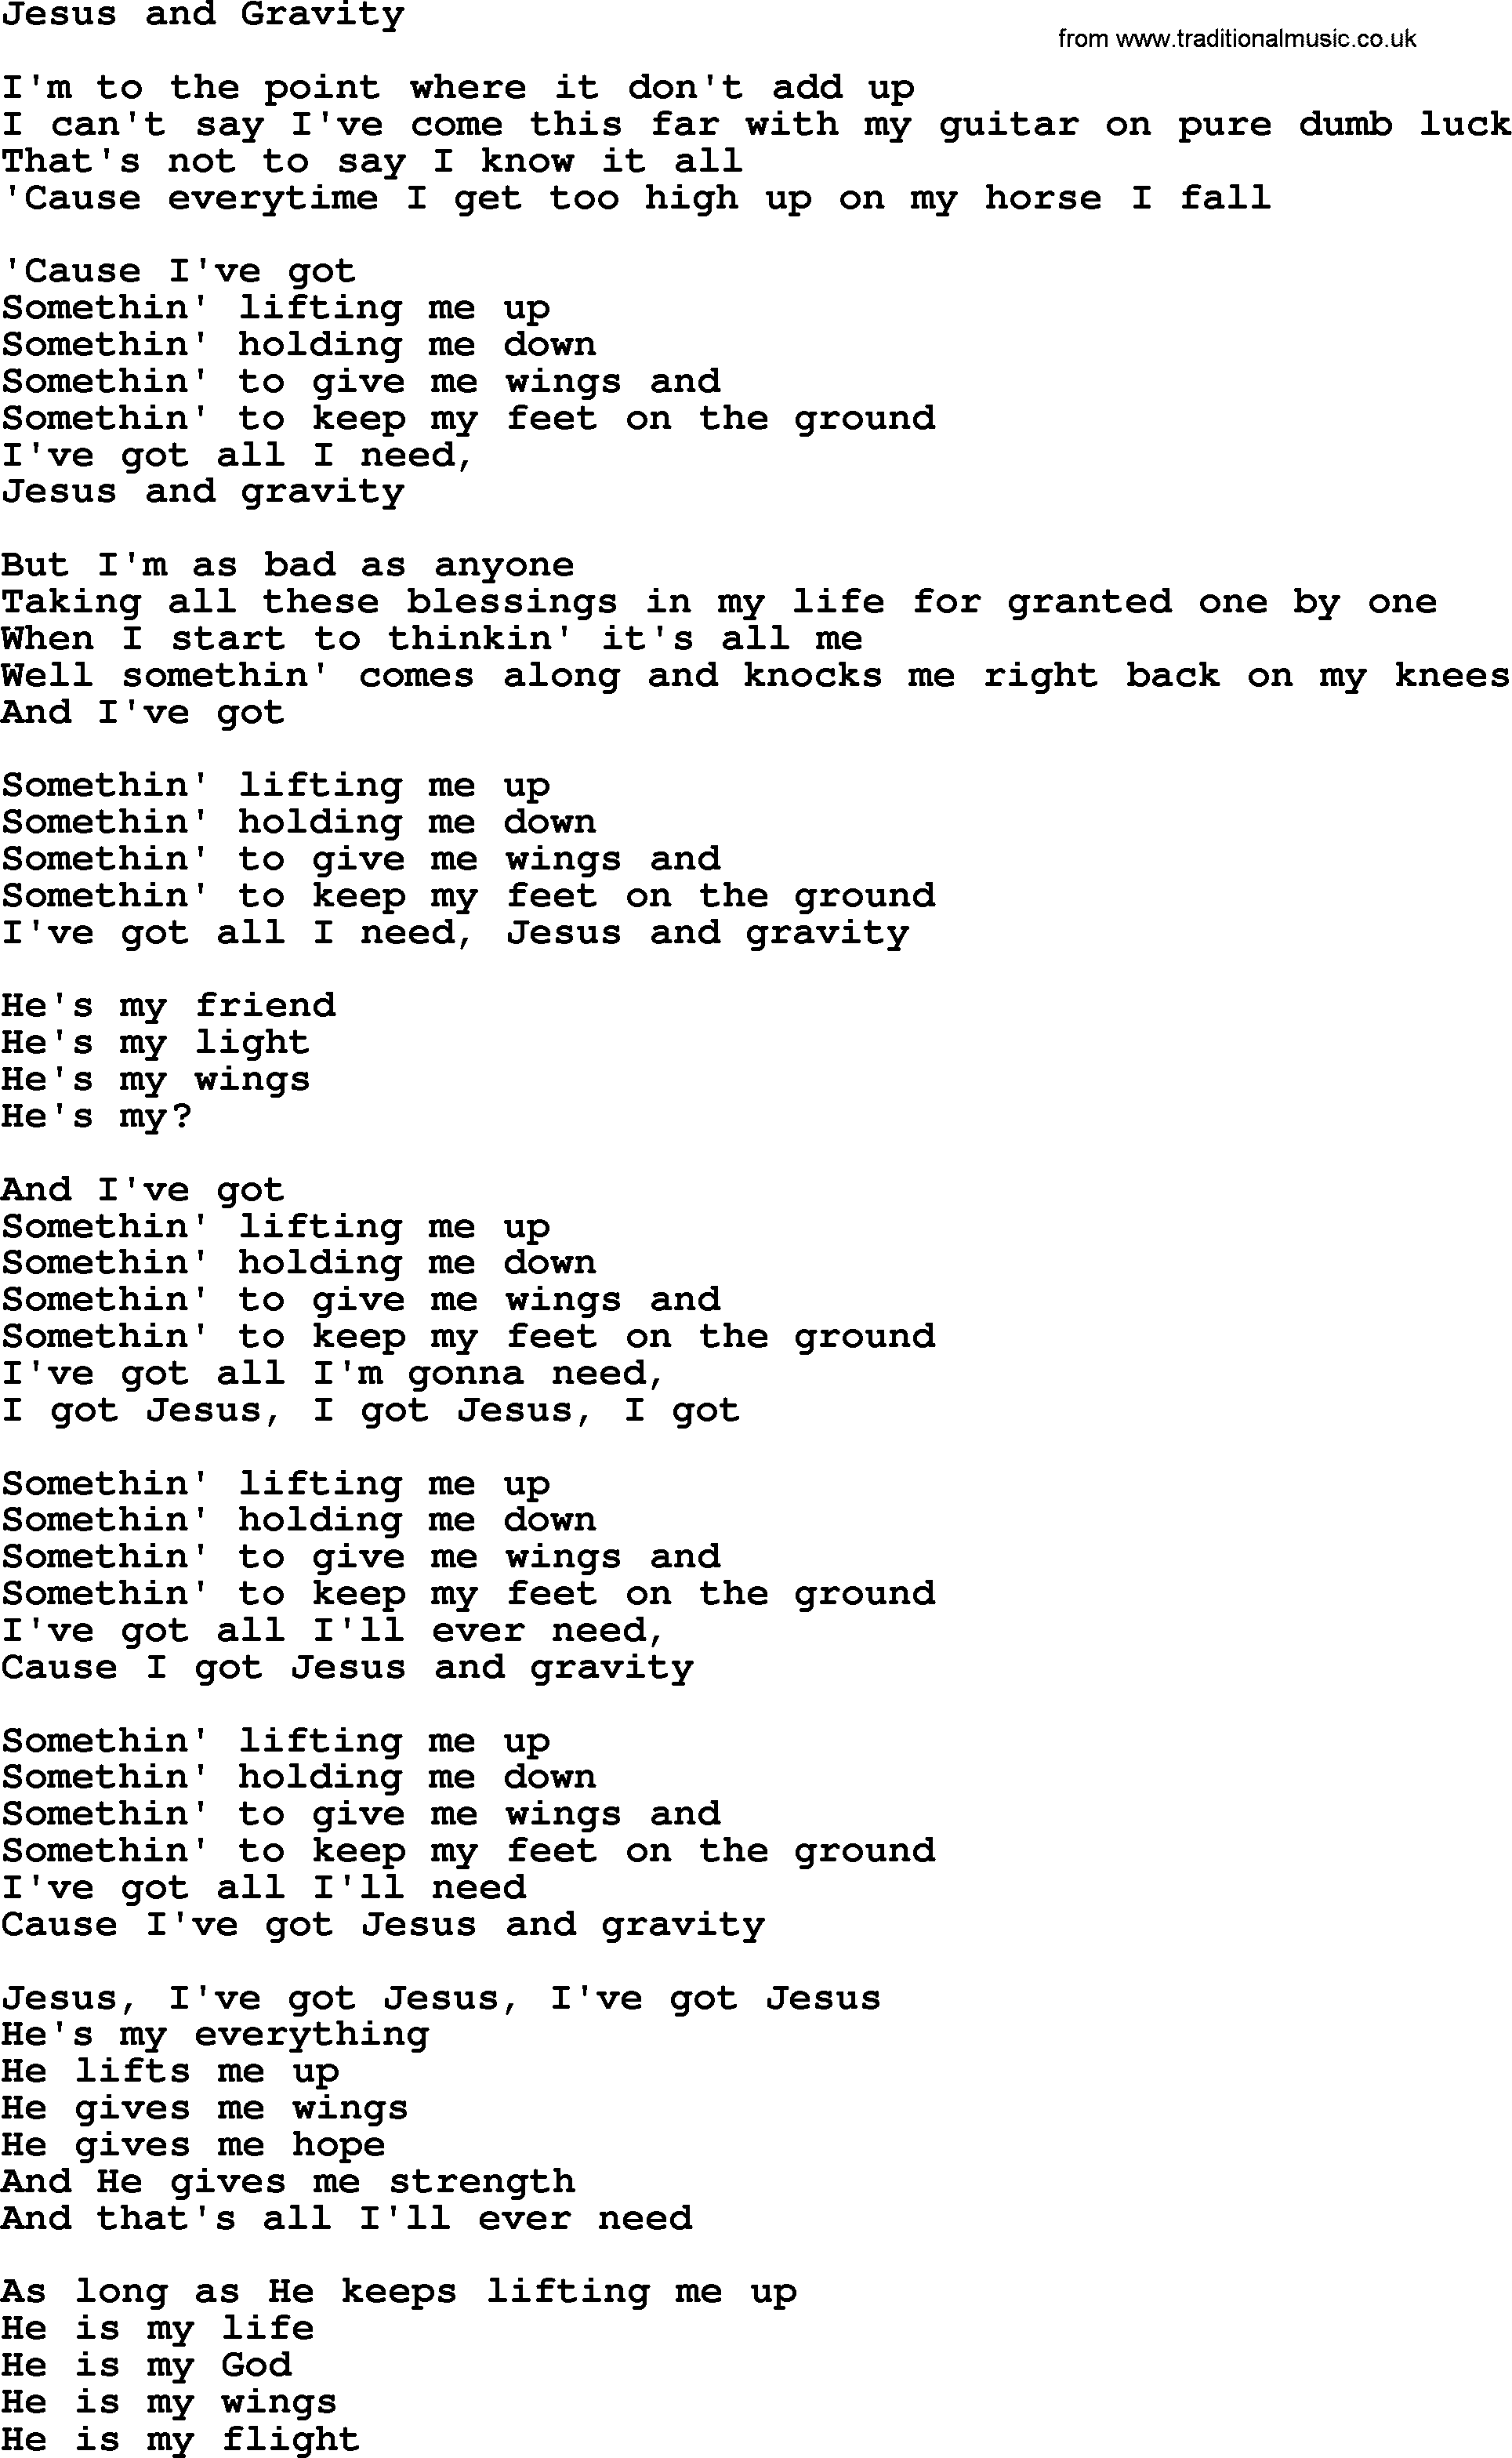 Dolly Parton song Jesus And Gravity.txt lyrics